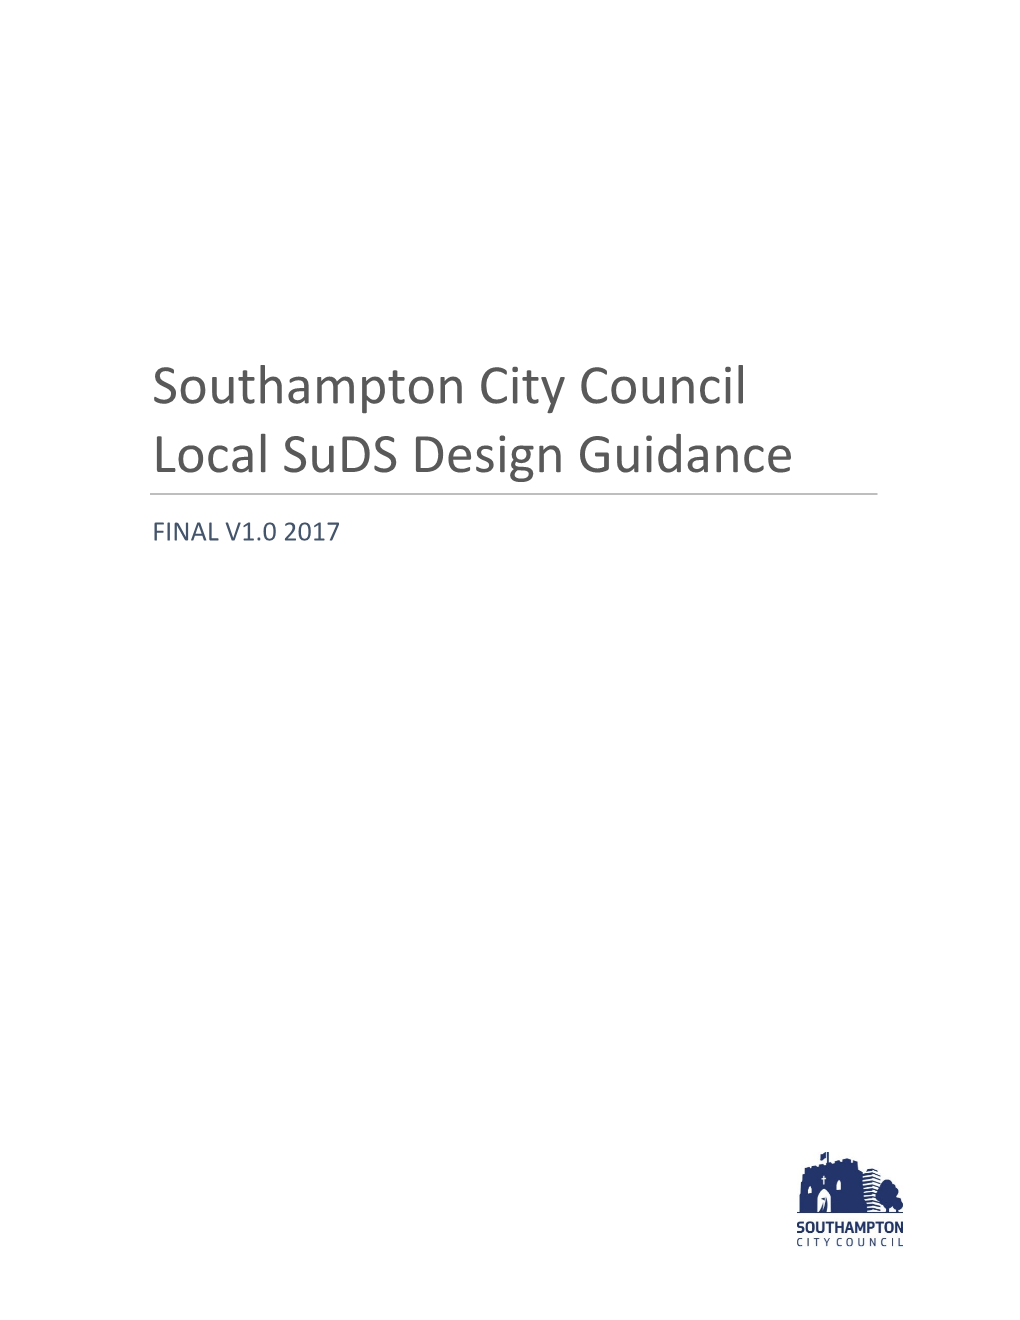 Local Suds Design Guidance